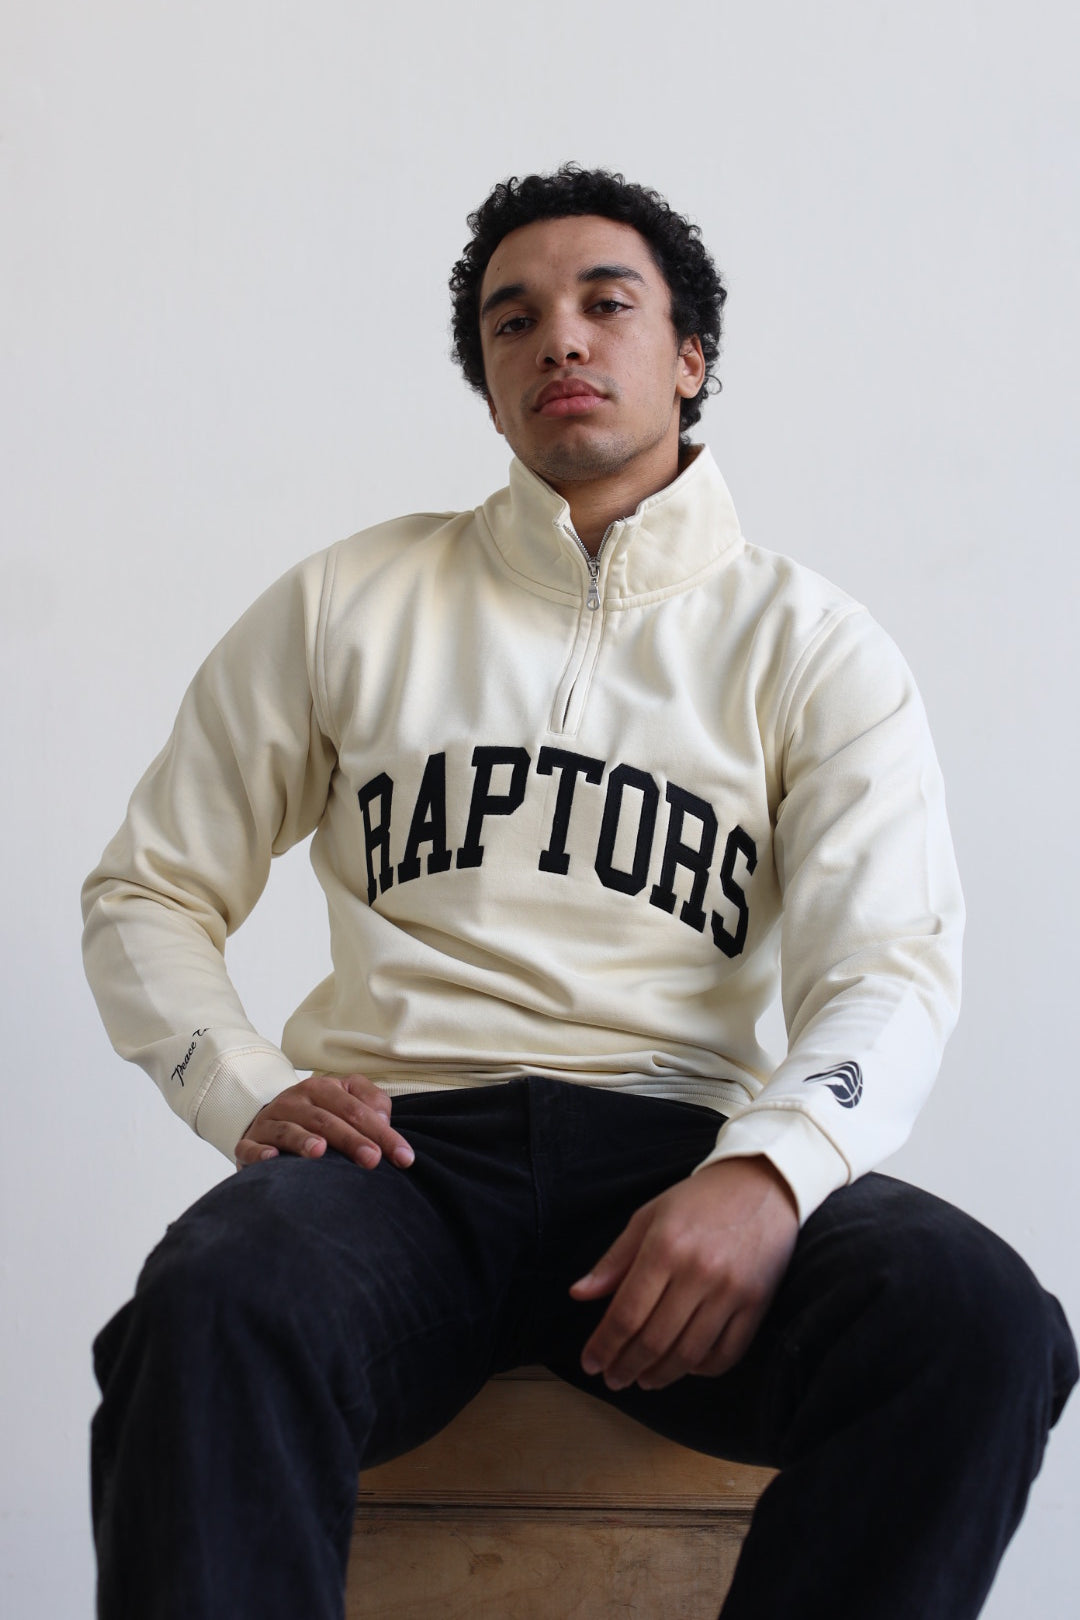 Toronto Raptors Collegiate Quarter Zip - Ivory